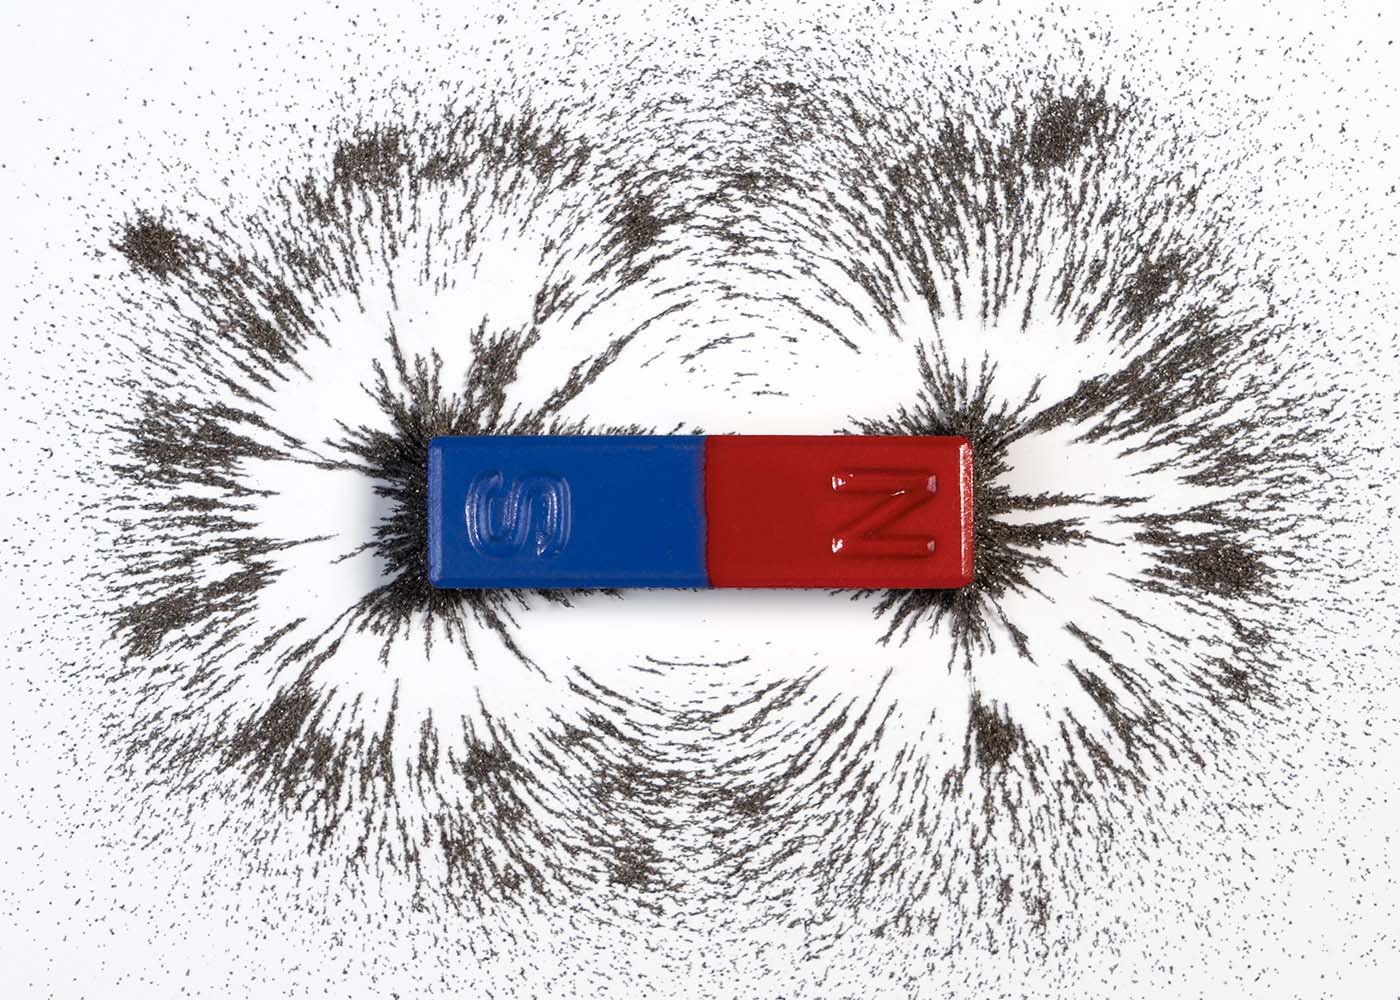 Marvellous Magnetism - Growing Scientists